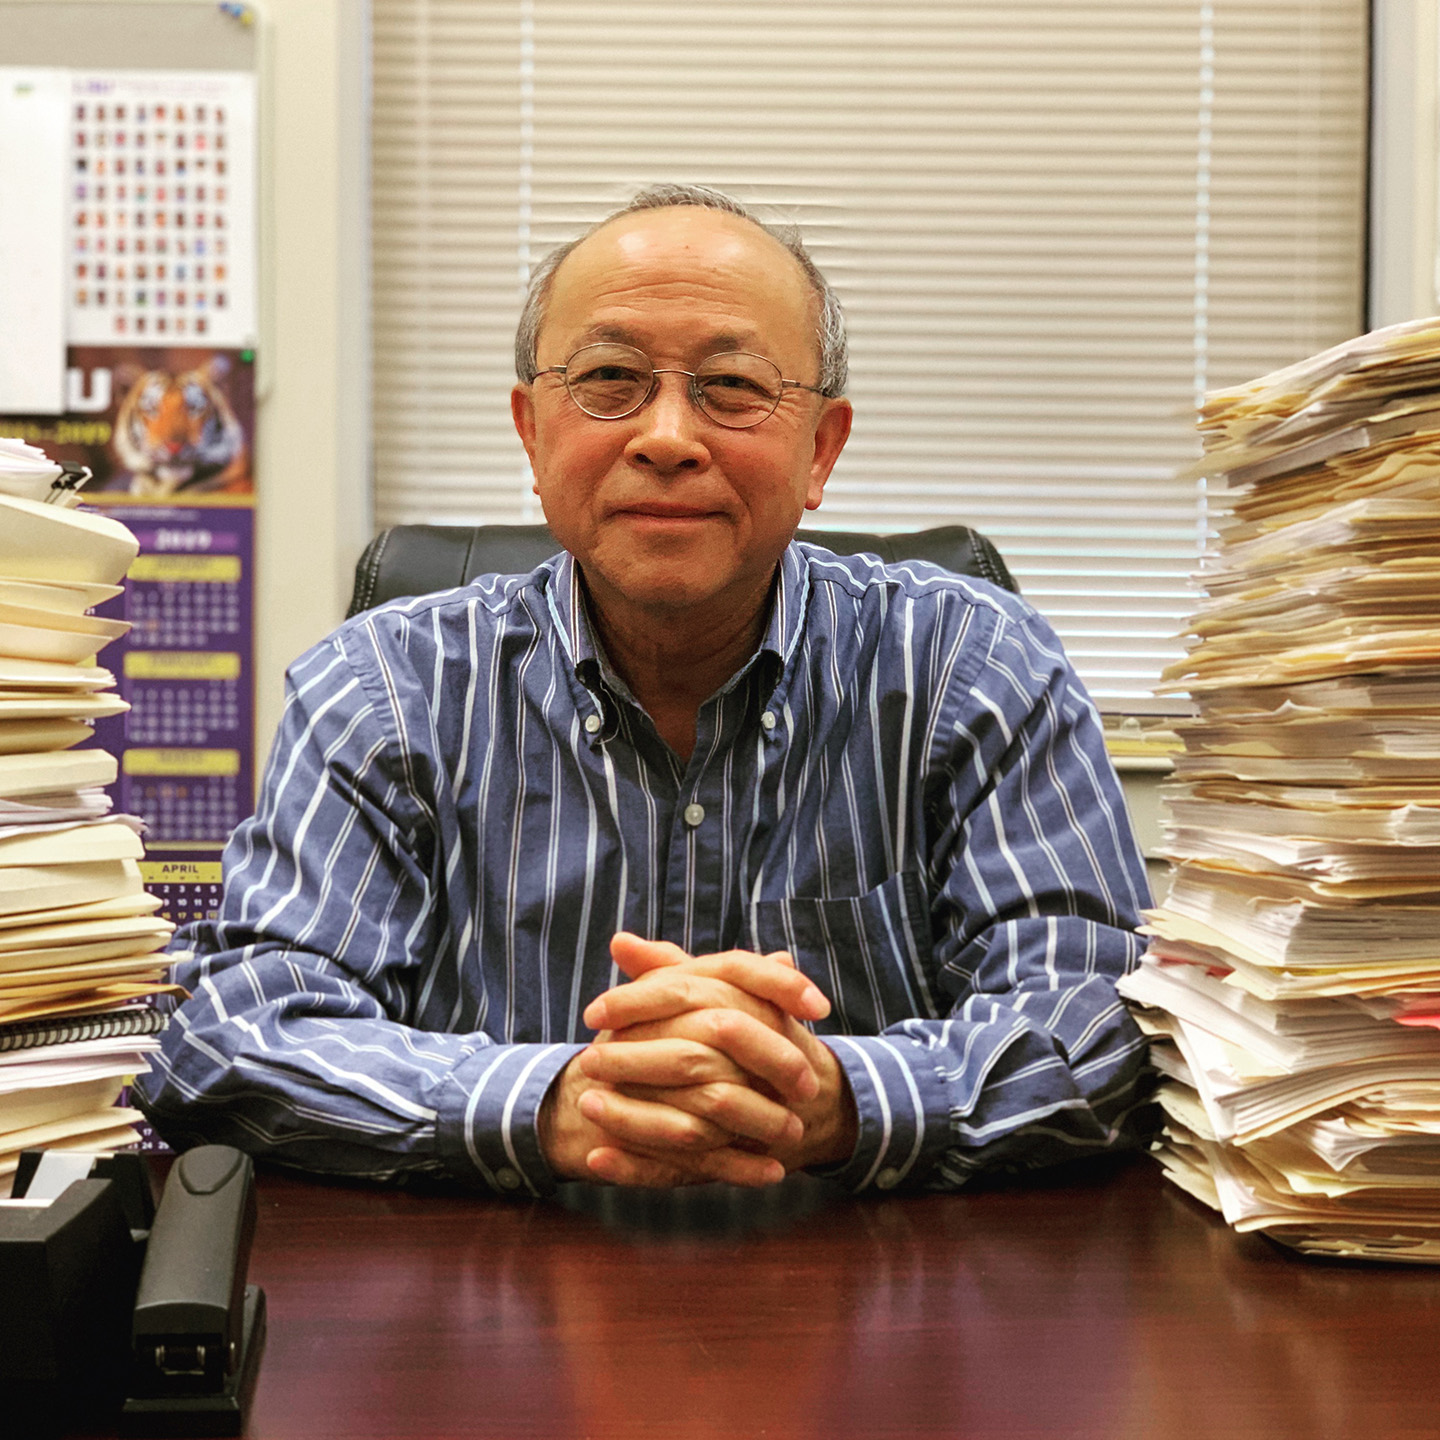 Kam-biu Liu at his desk with stacks of papers